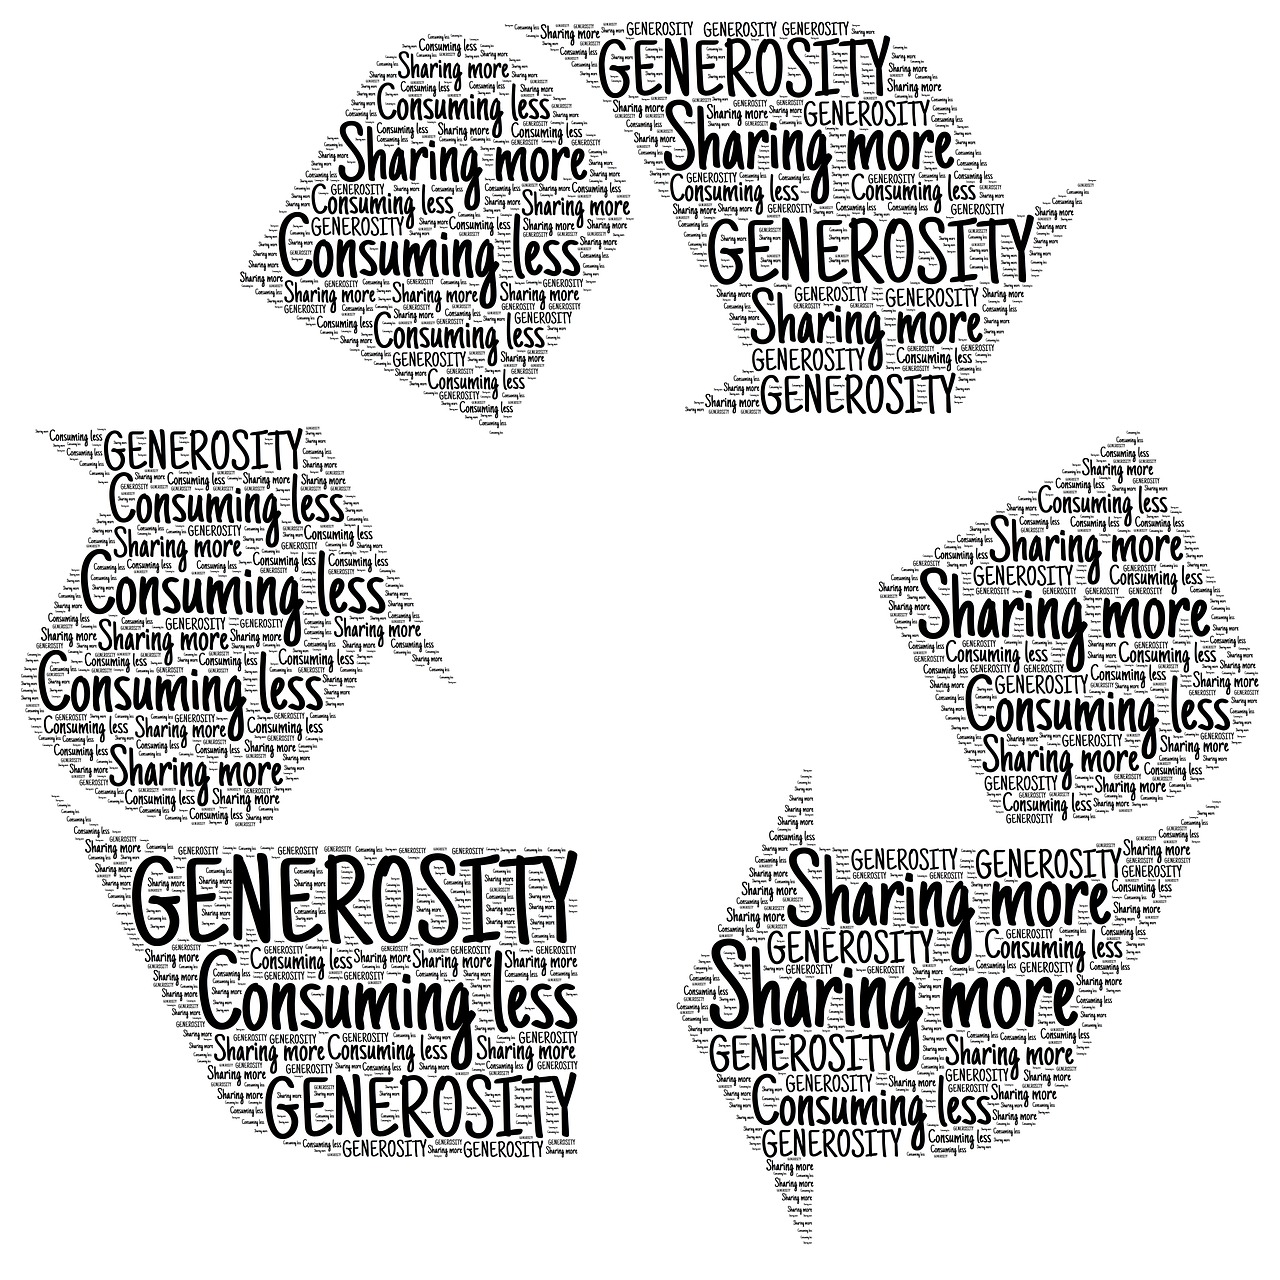 recycling generosity consumption free photo